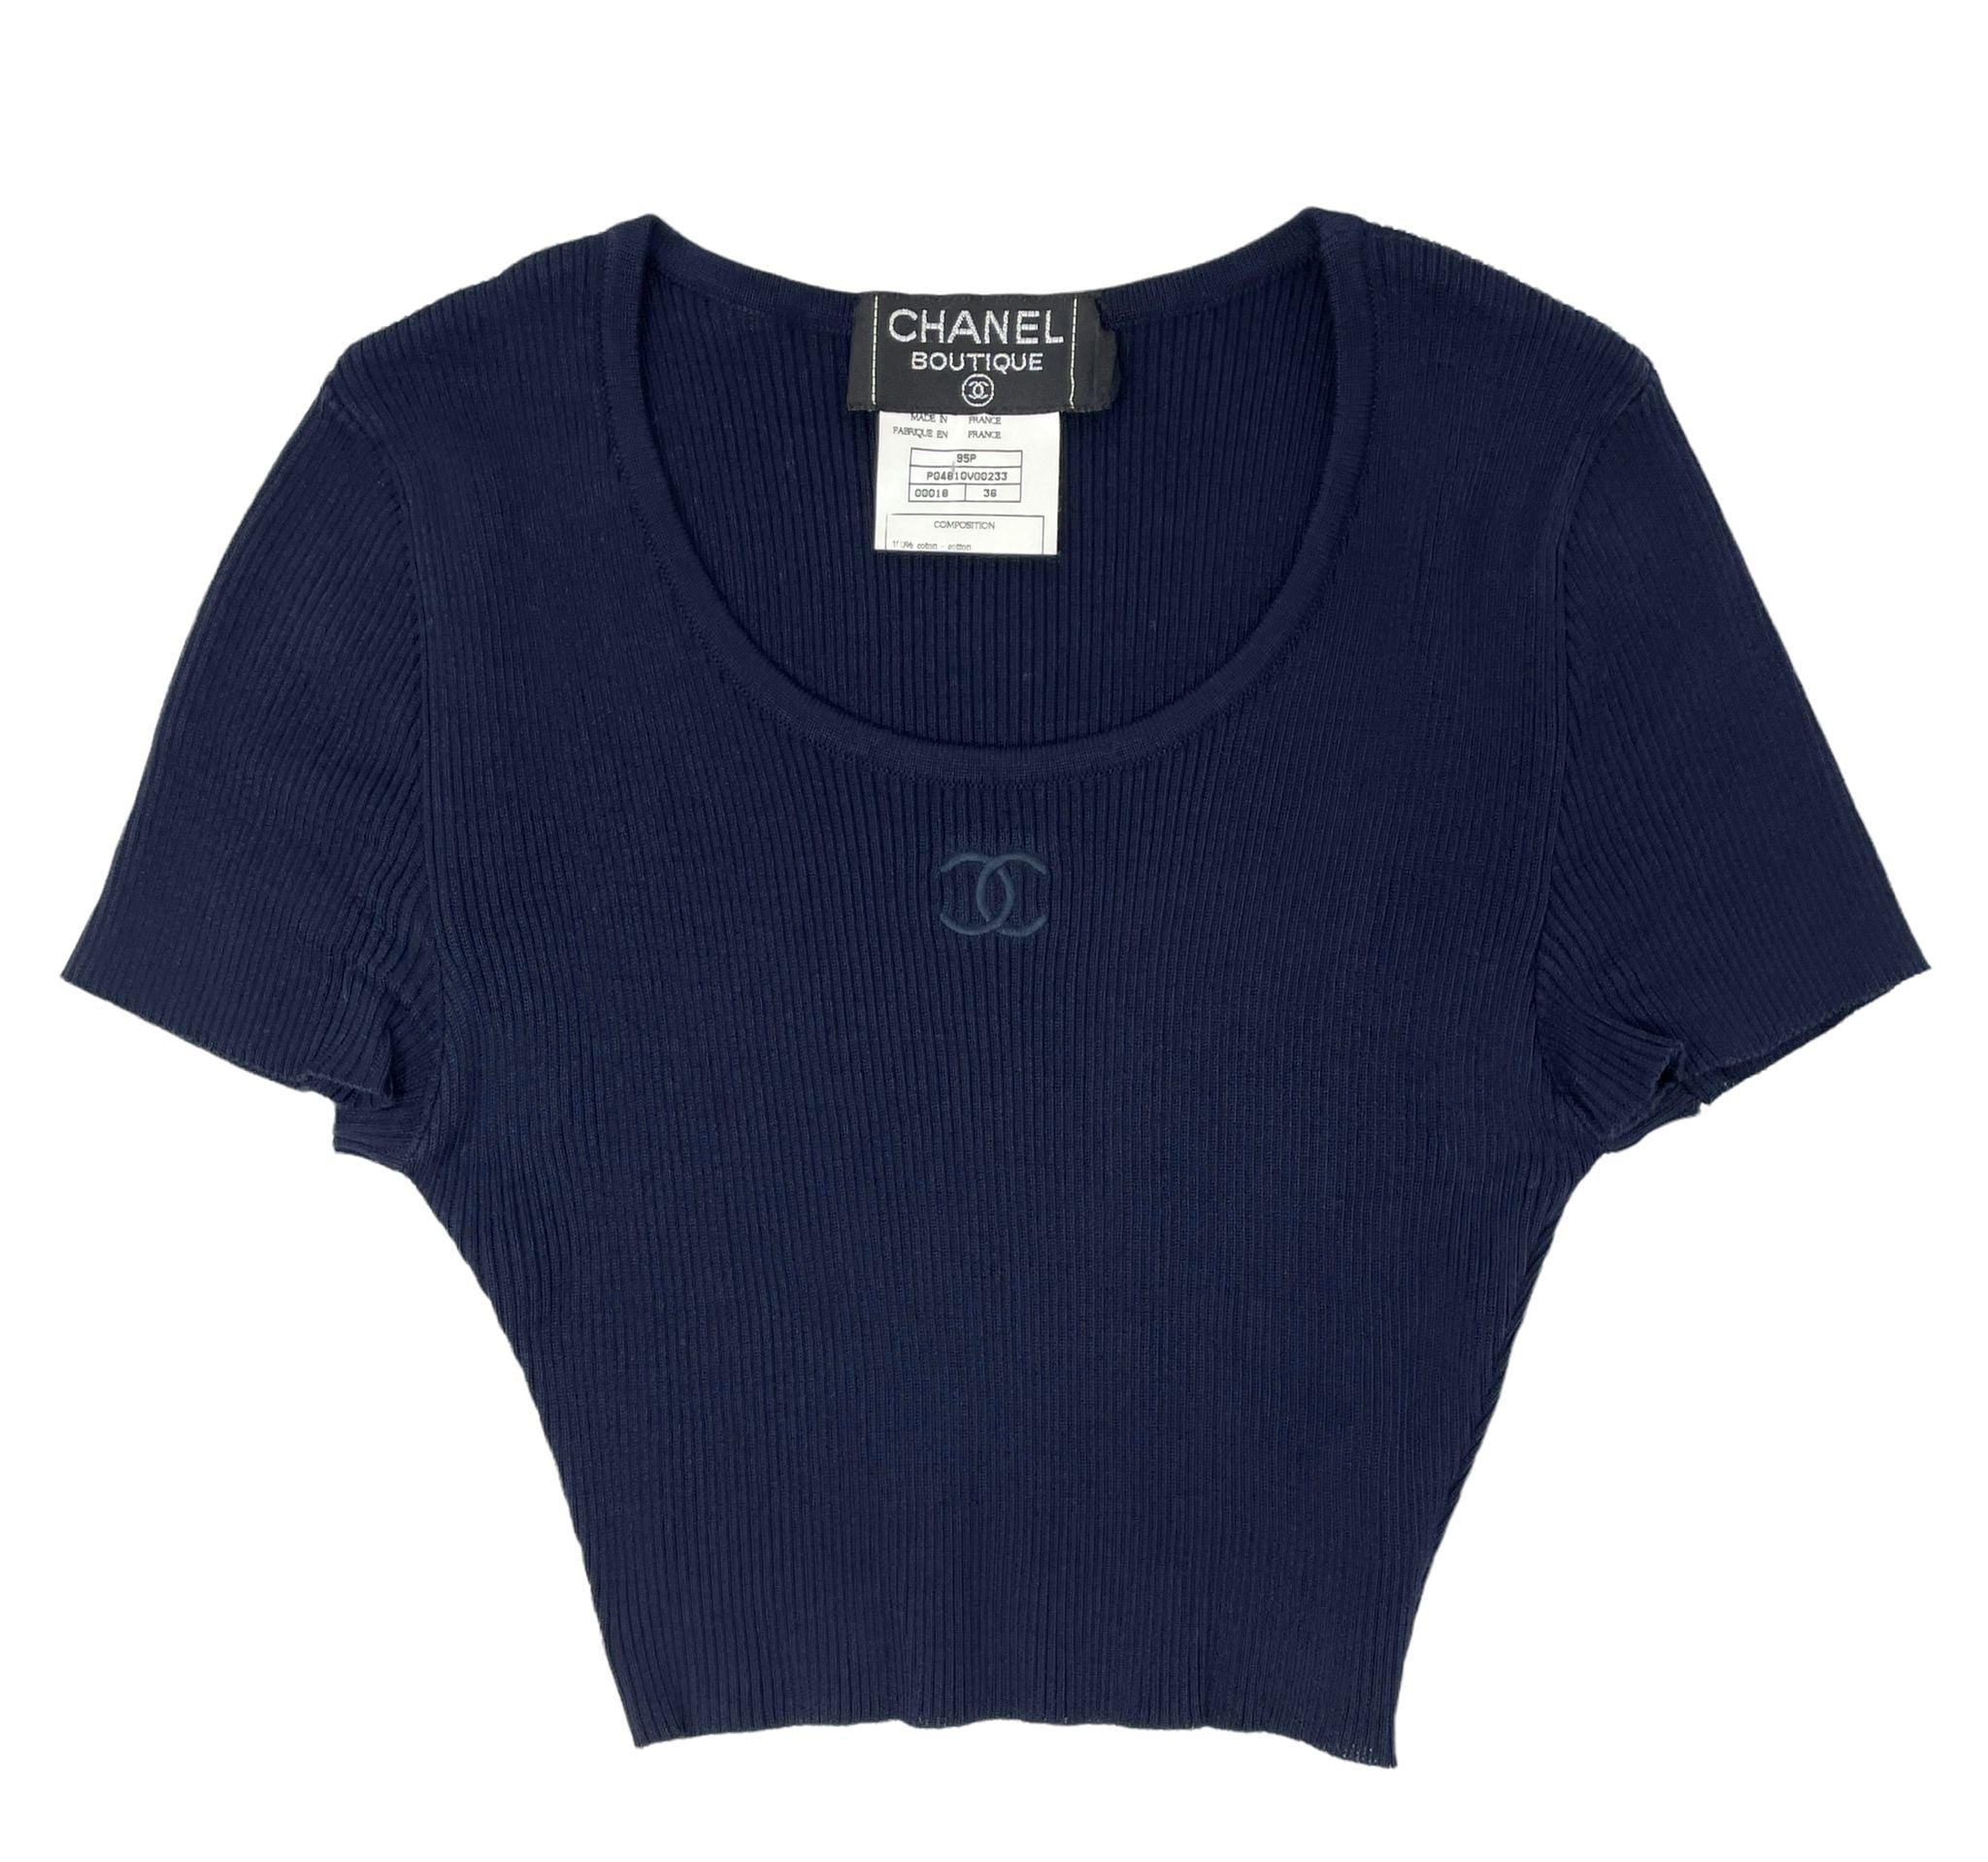 $2280 NEW Chanel Top Tee Shirt CC Logo Blue Sleeveless Viscose Bow 36